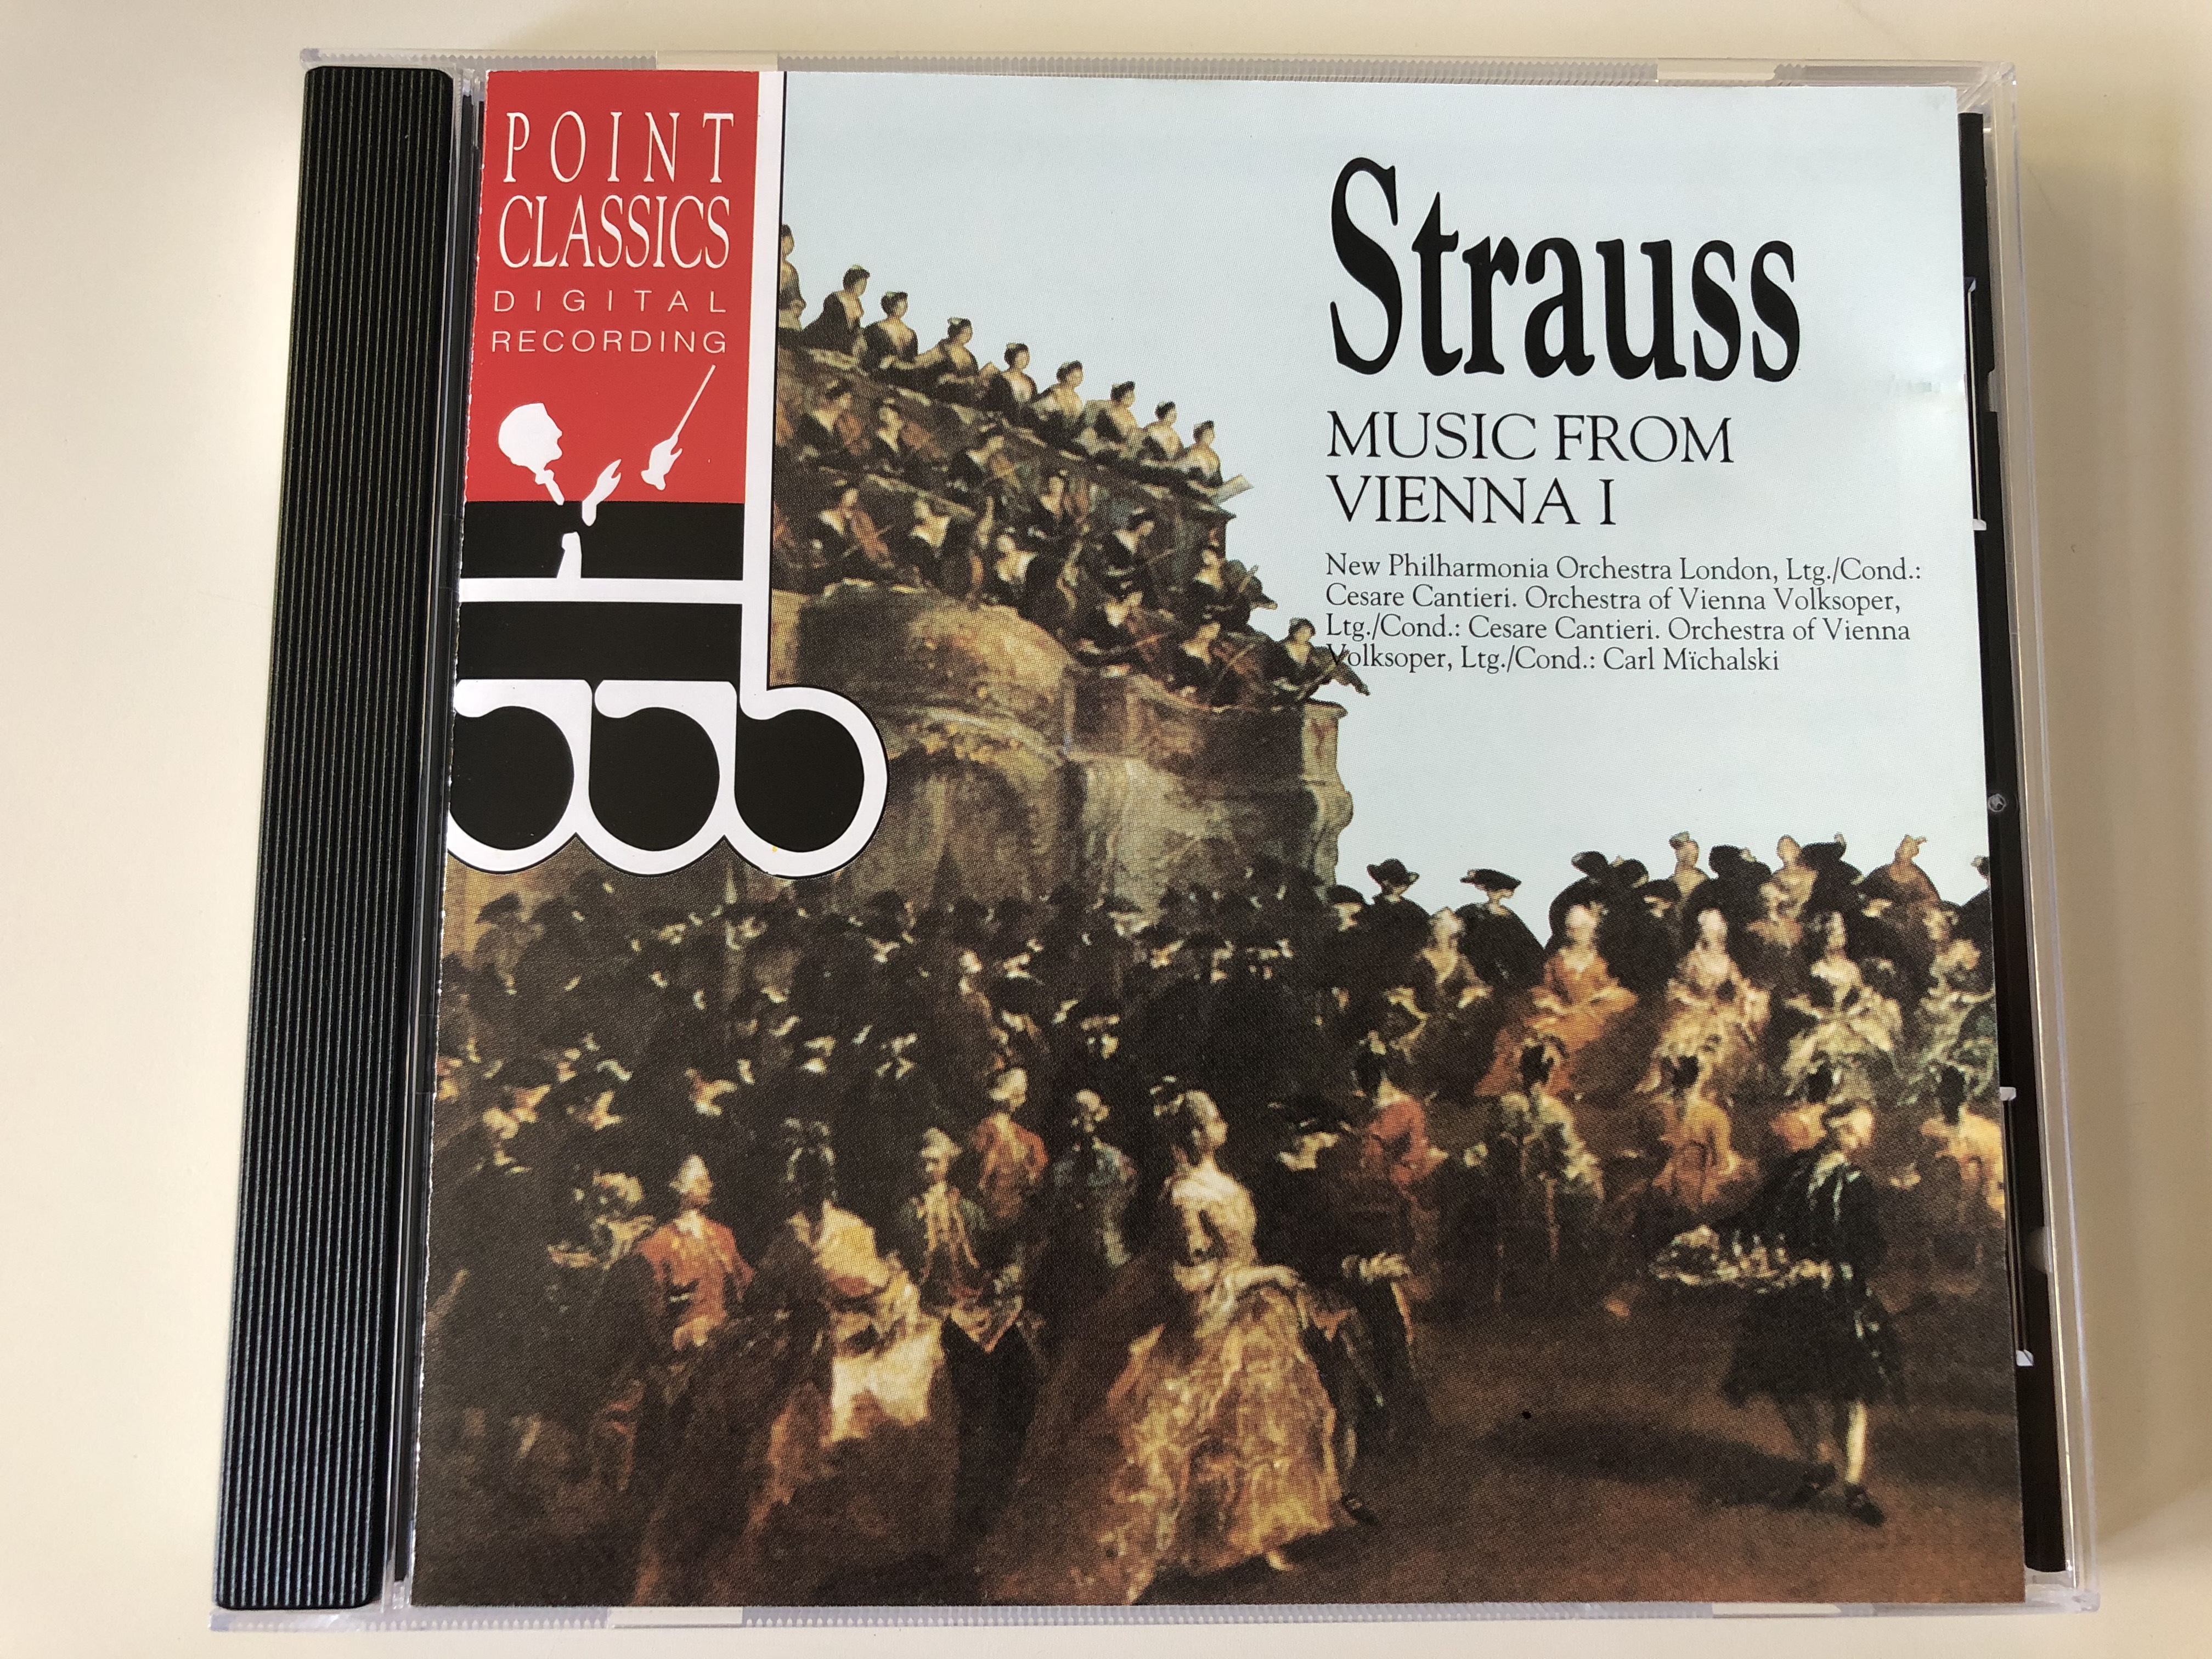 strauss-music-from-vienna-i-new-philharmonia-orchestra-london-cond.-cesare-cantieri-orchestra-of-vienna-volksoper-cond.-carl-michalski-point-classics-audio-cd-1994-2650842-1-.jpg